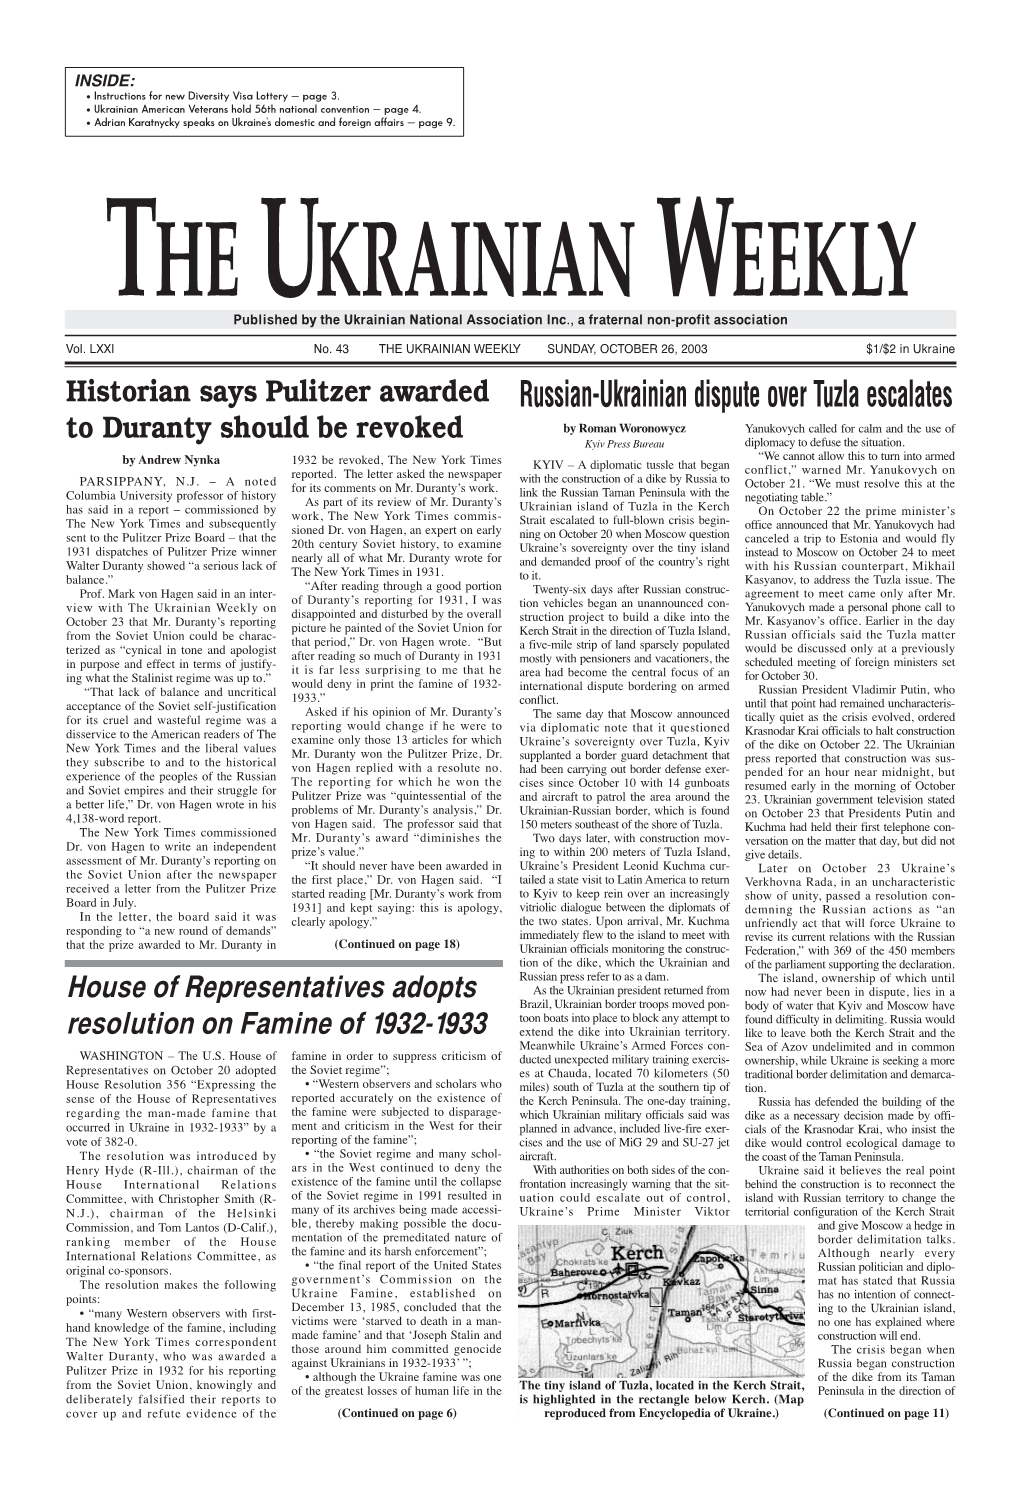 The Ukrainian Weekly 2003, No.43